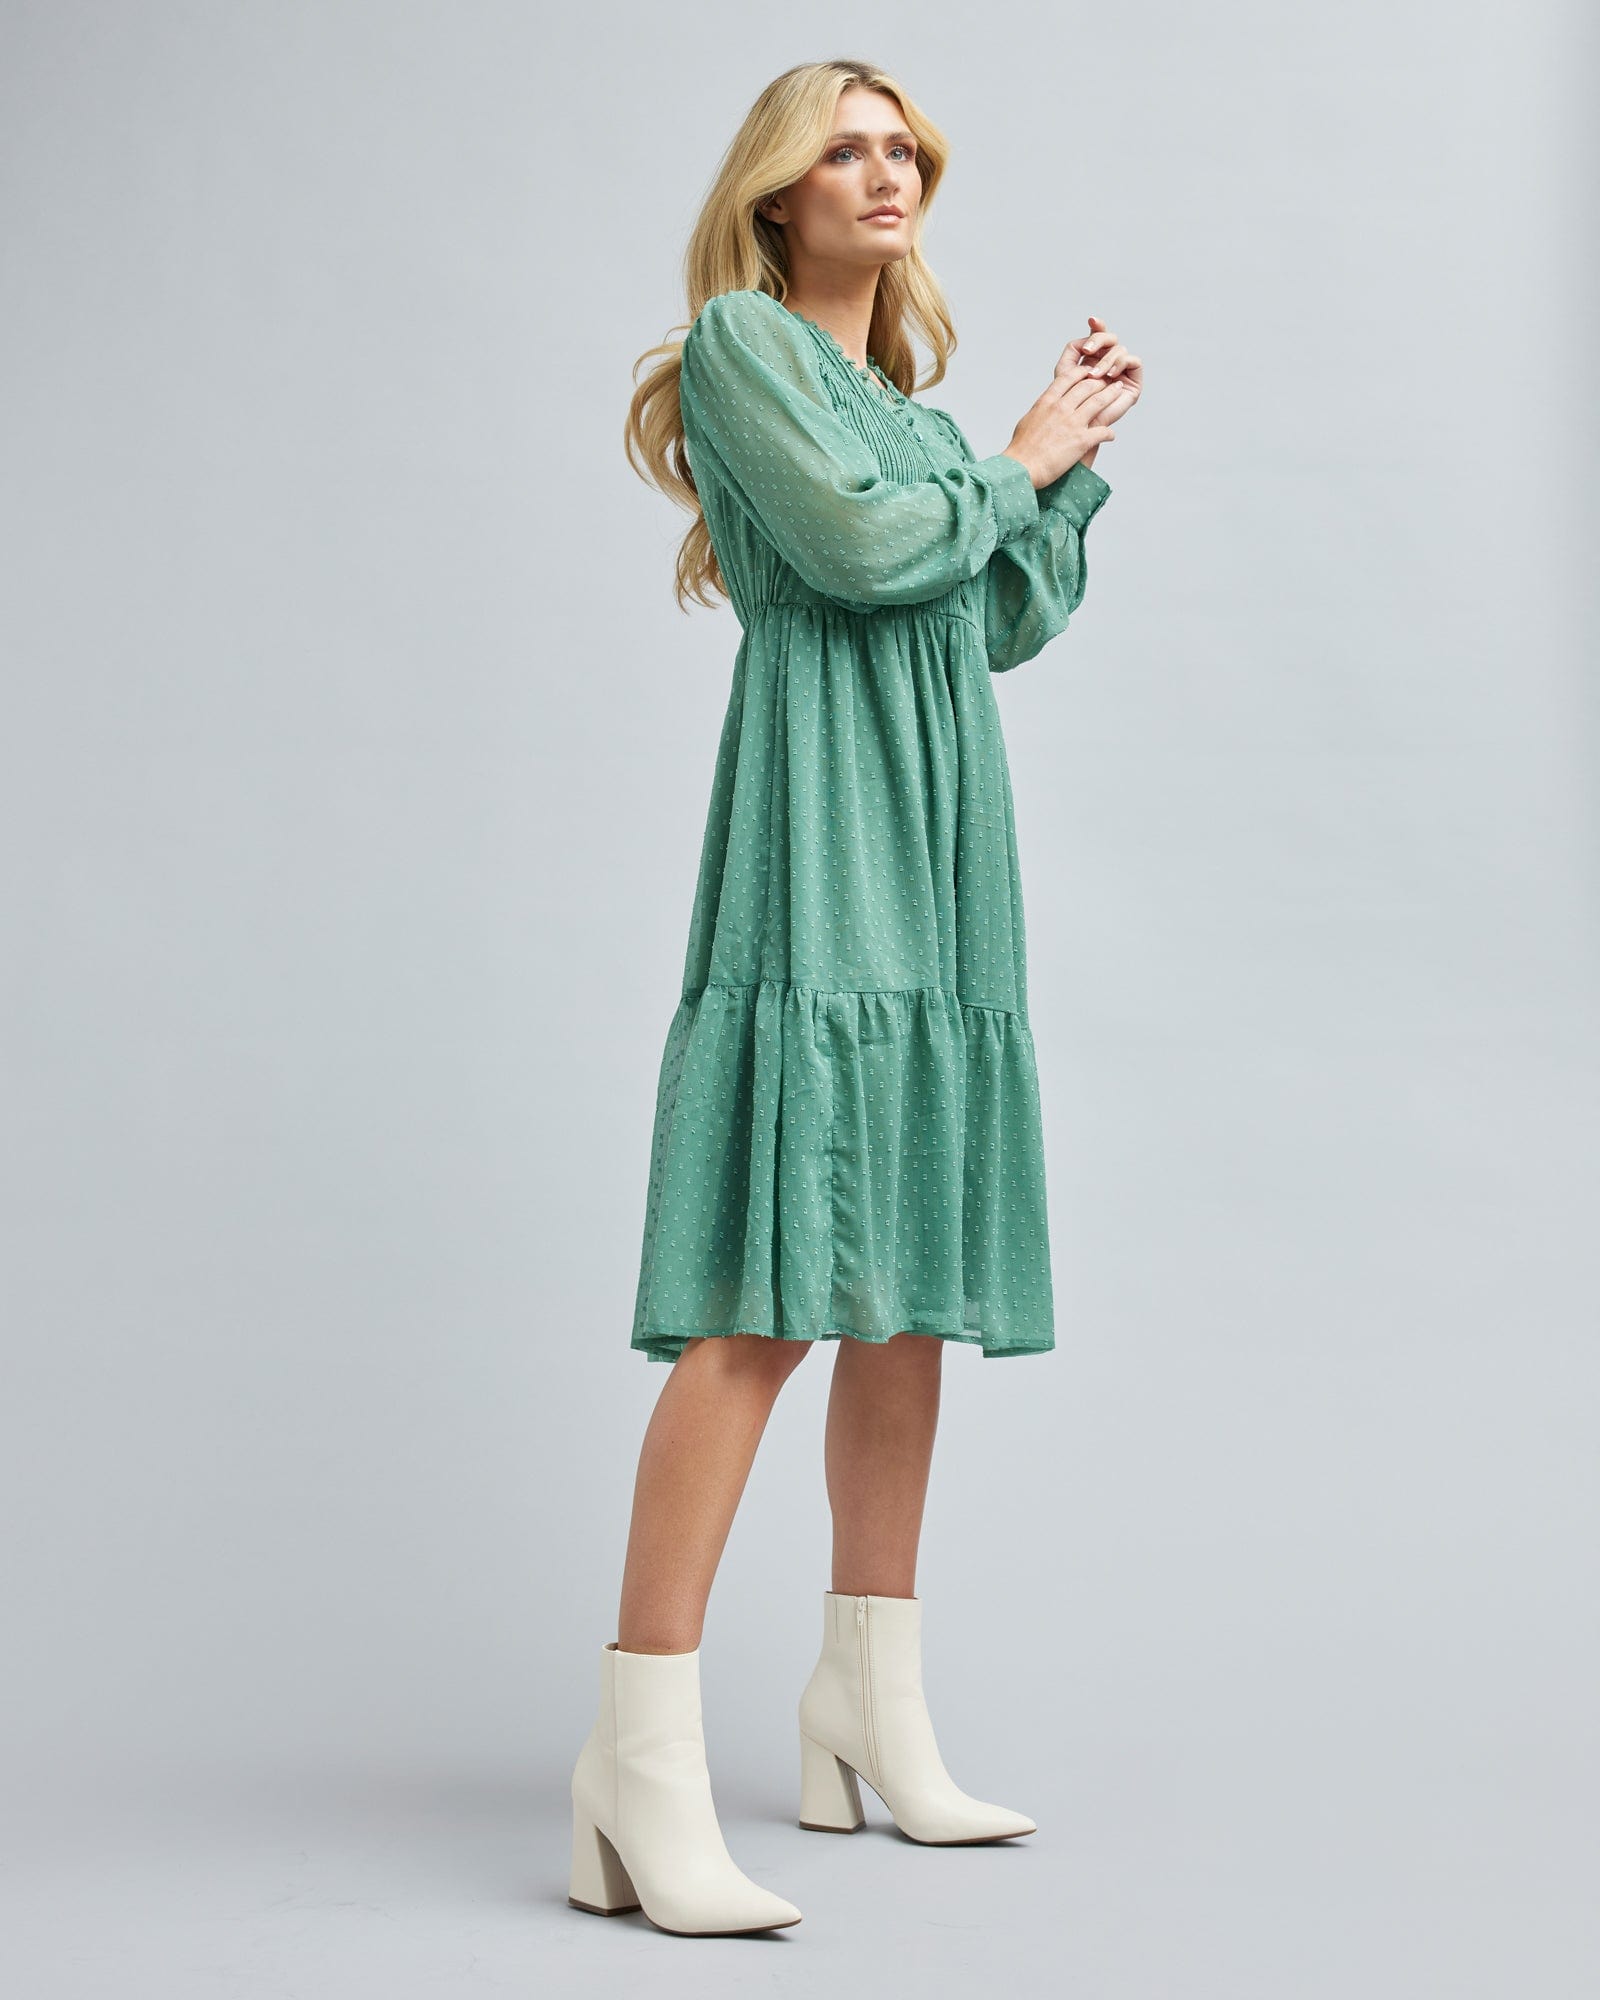 Woman in a long sleeve, green, midi length dress